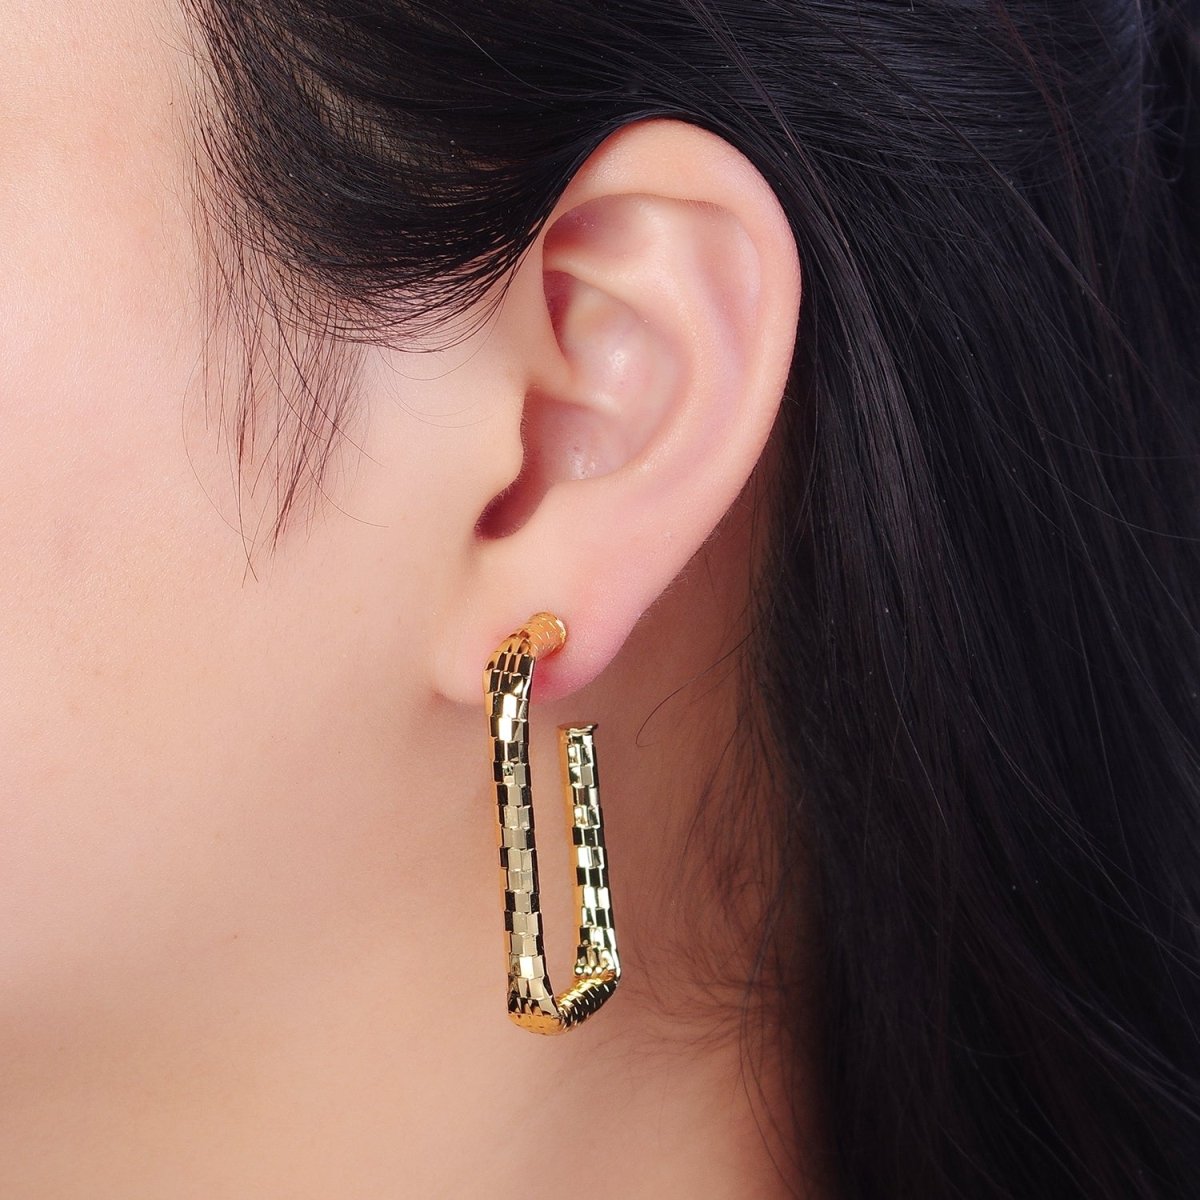 Checkered Hoop Earrings, Minimalist Gold Hoop Earrings, Stylish Silver Rectangle Hoop Earring T-409 T-410 - DLUXCA